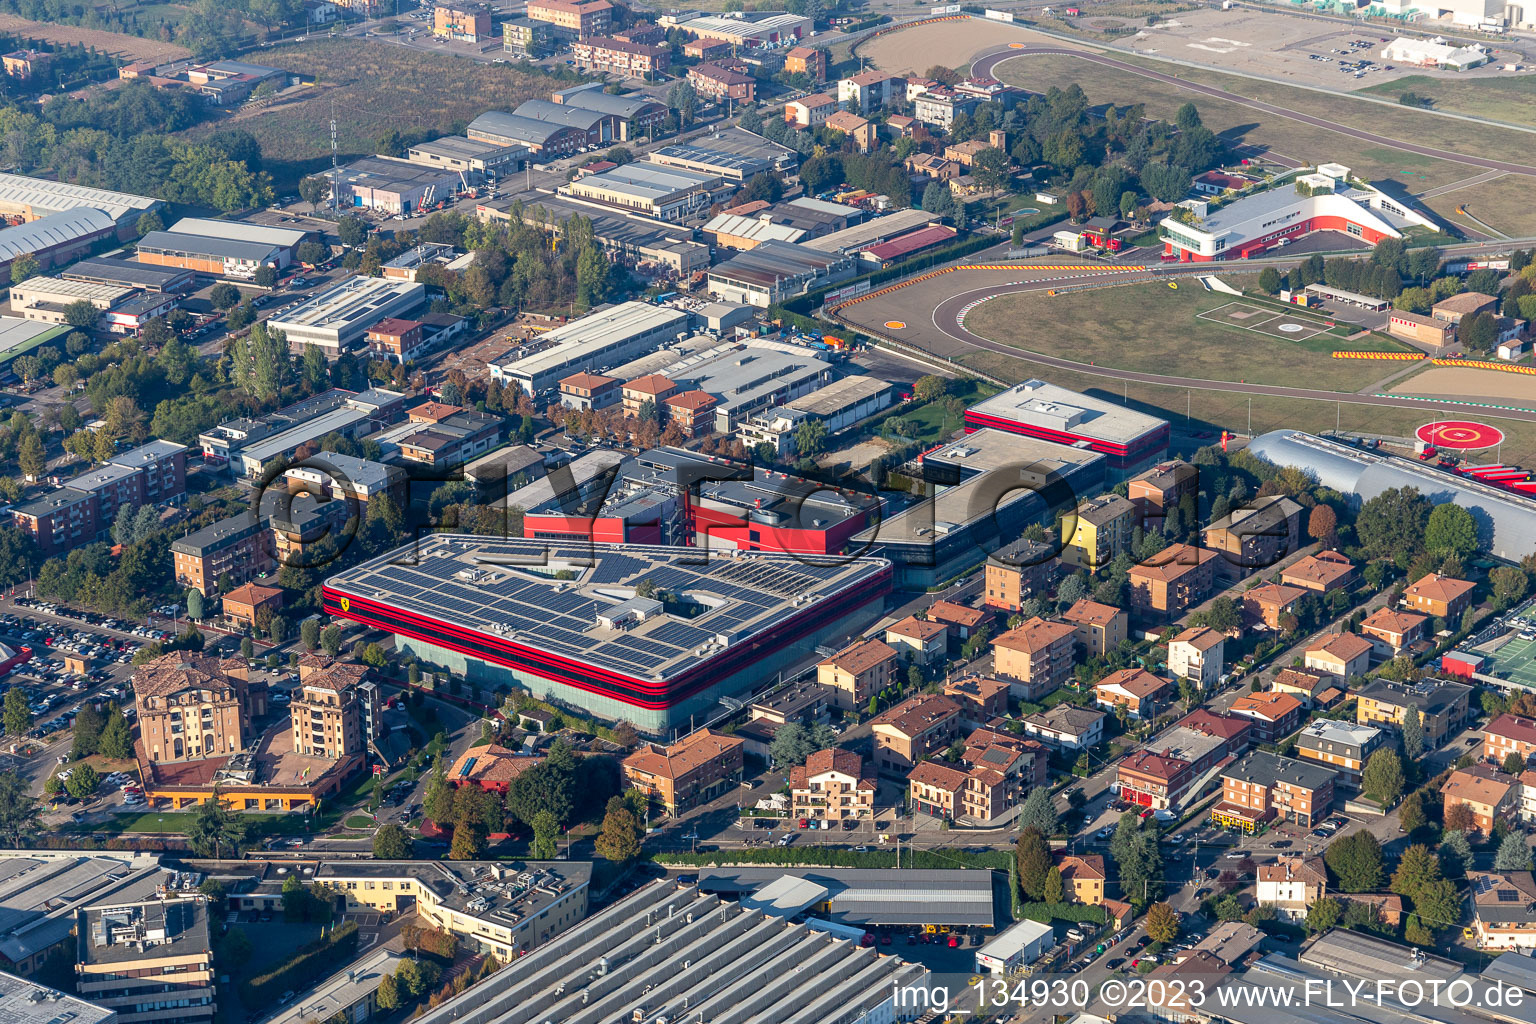 Ferrari SPA in Maranello in the state Modena, Italy seen from a drone